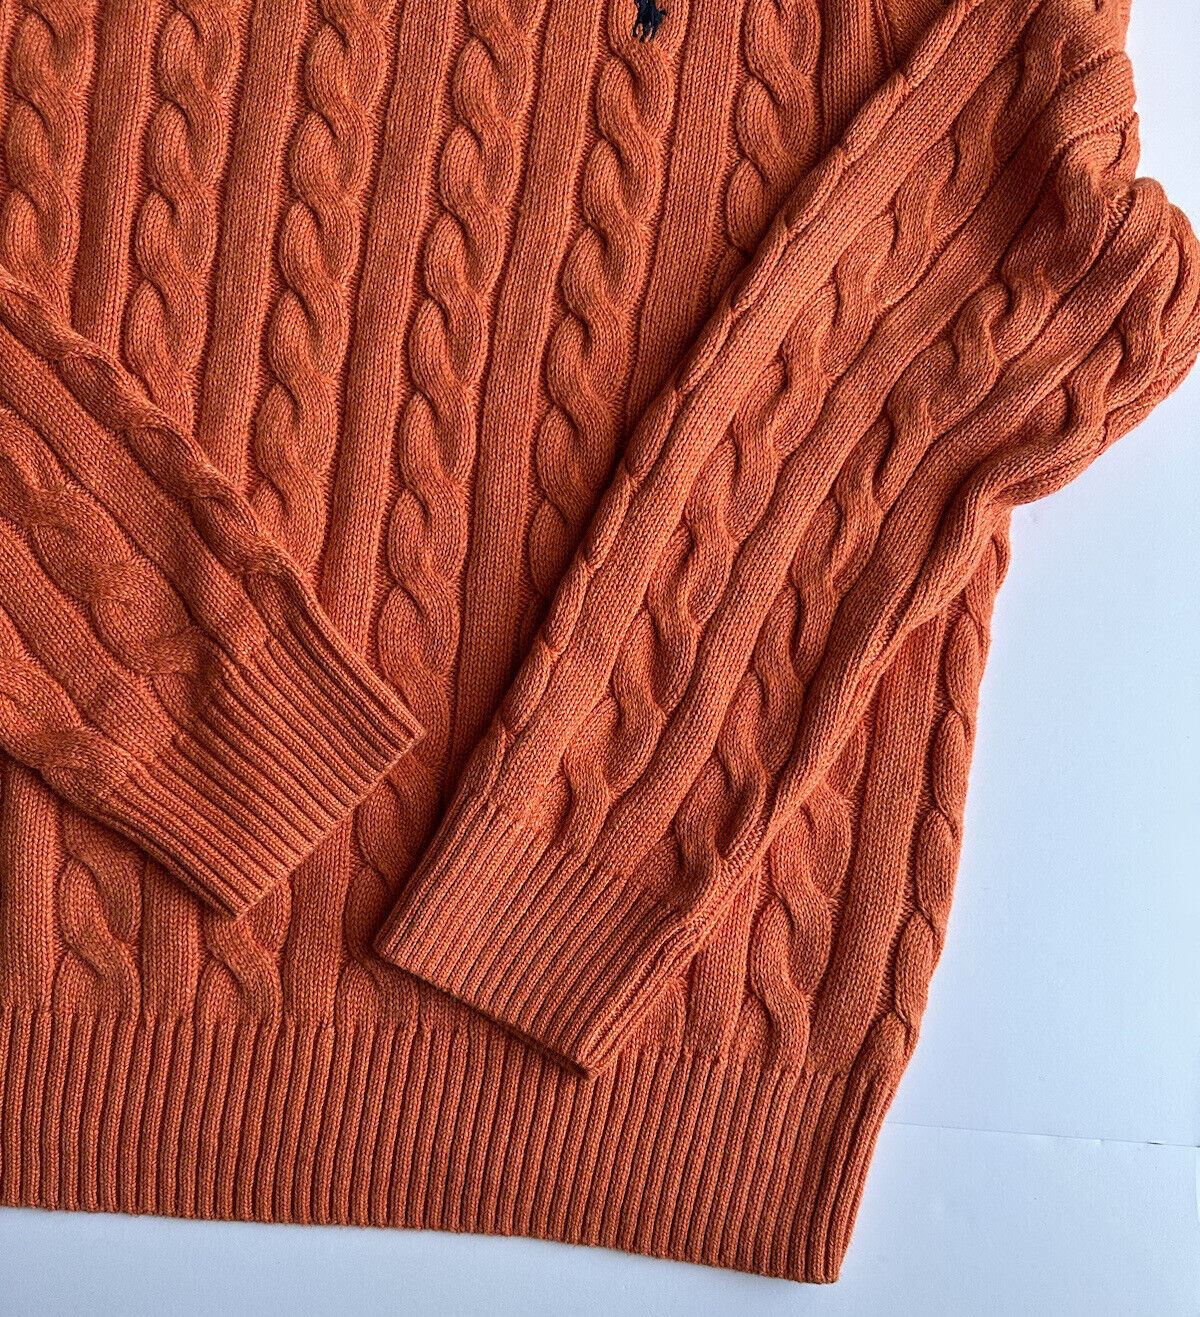 NWT $138 Polo Ralph Lauren Men's Knit Sweater Orange XL/TG